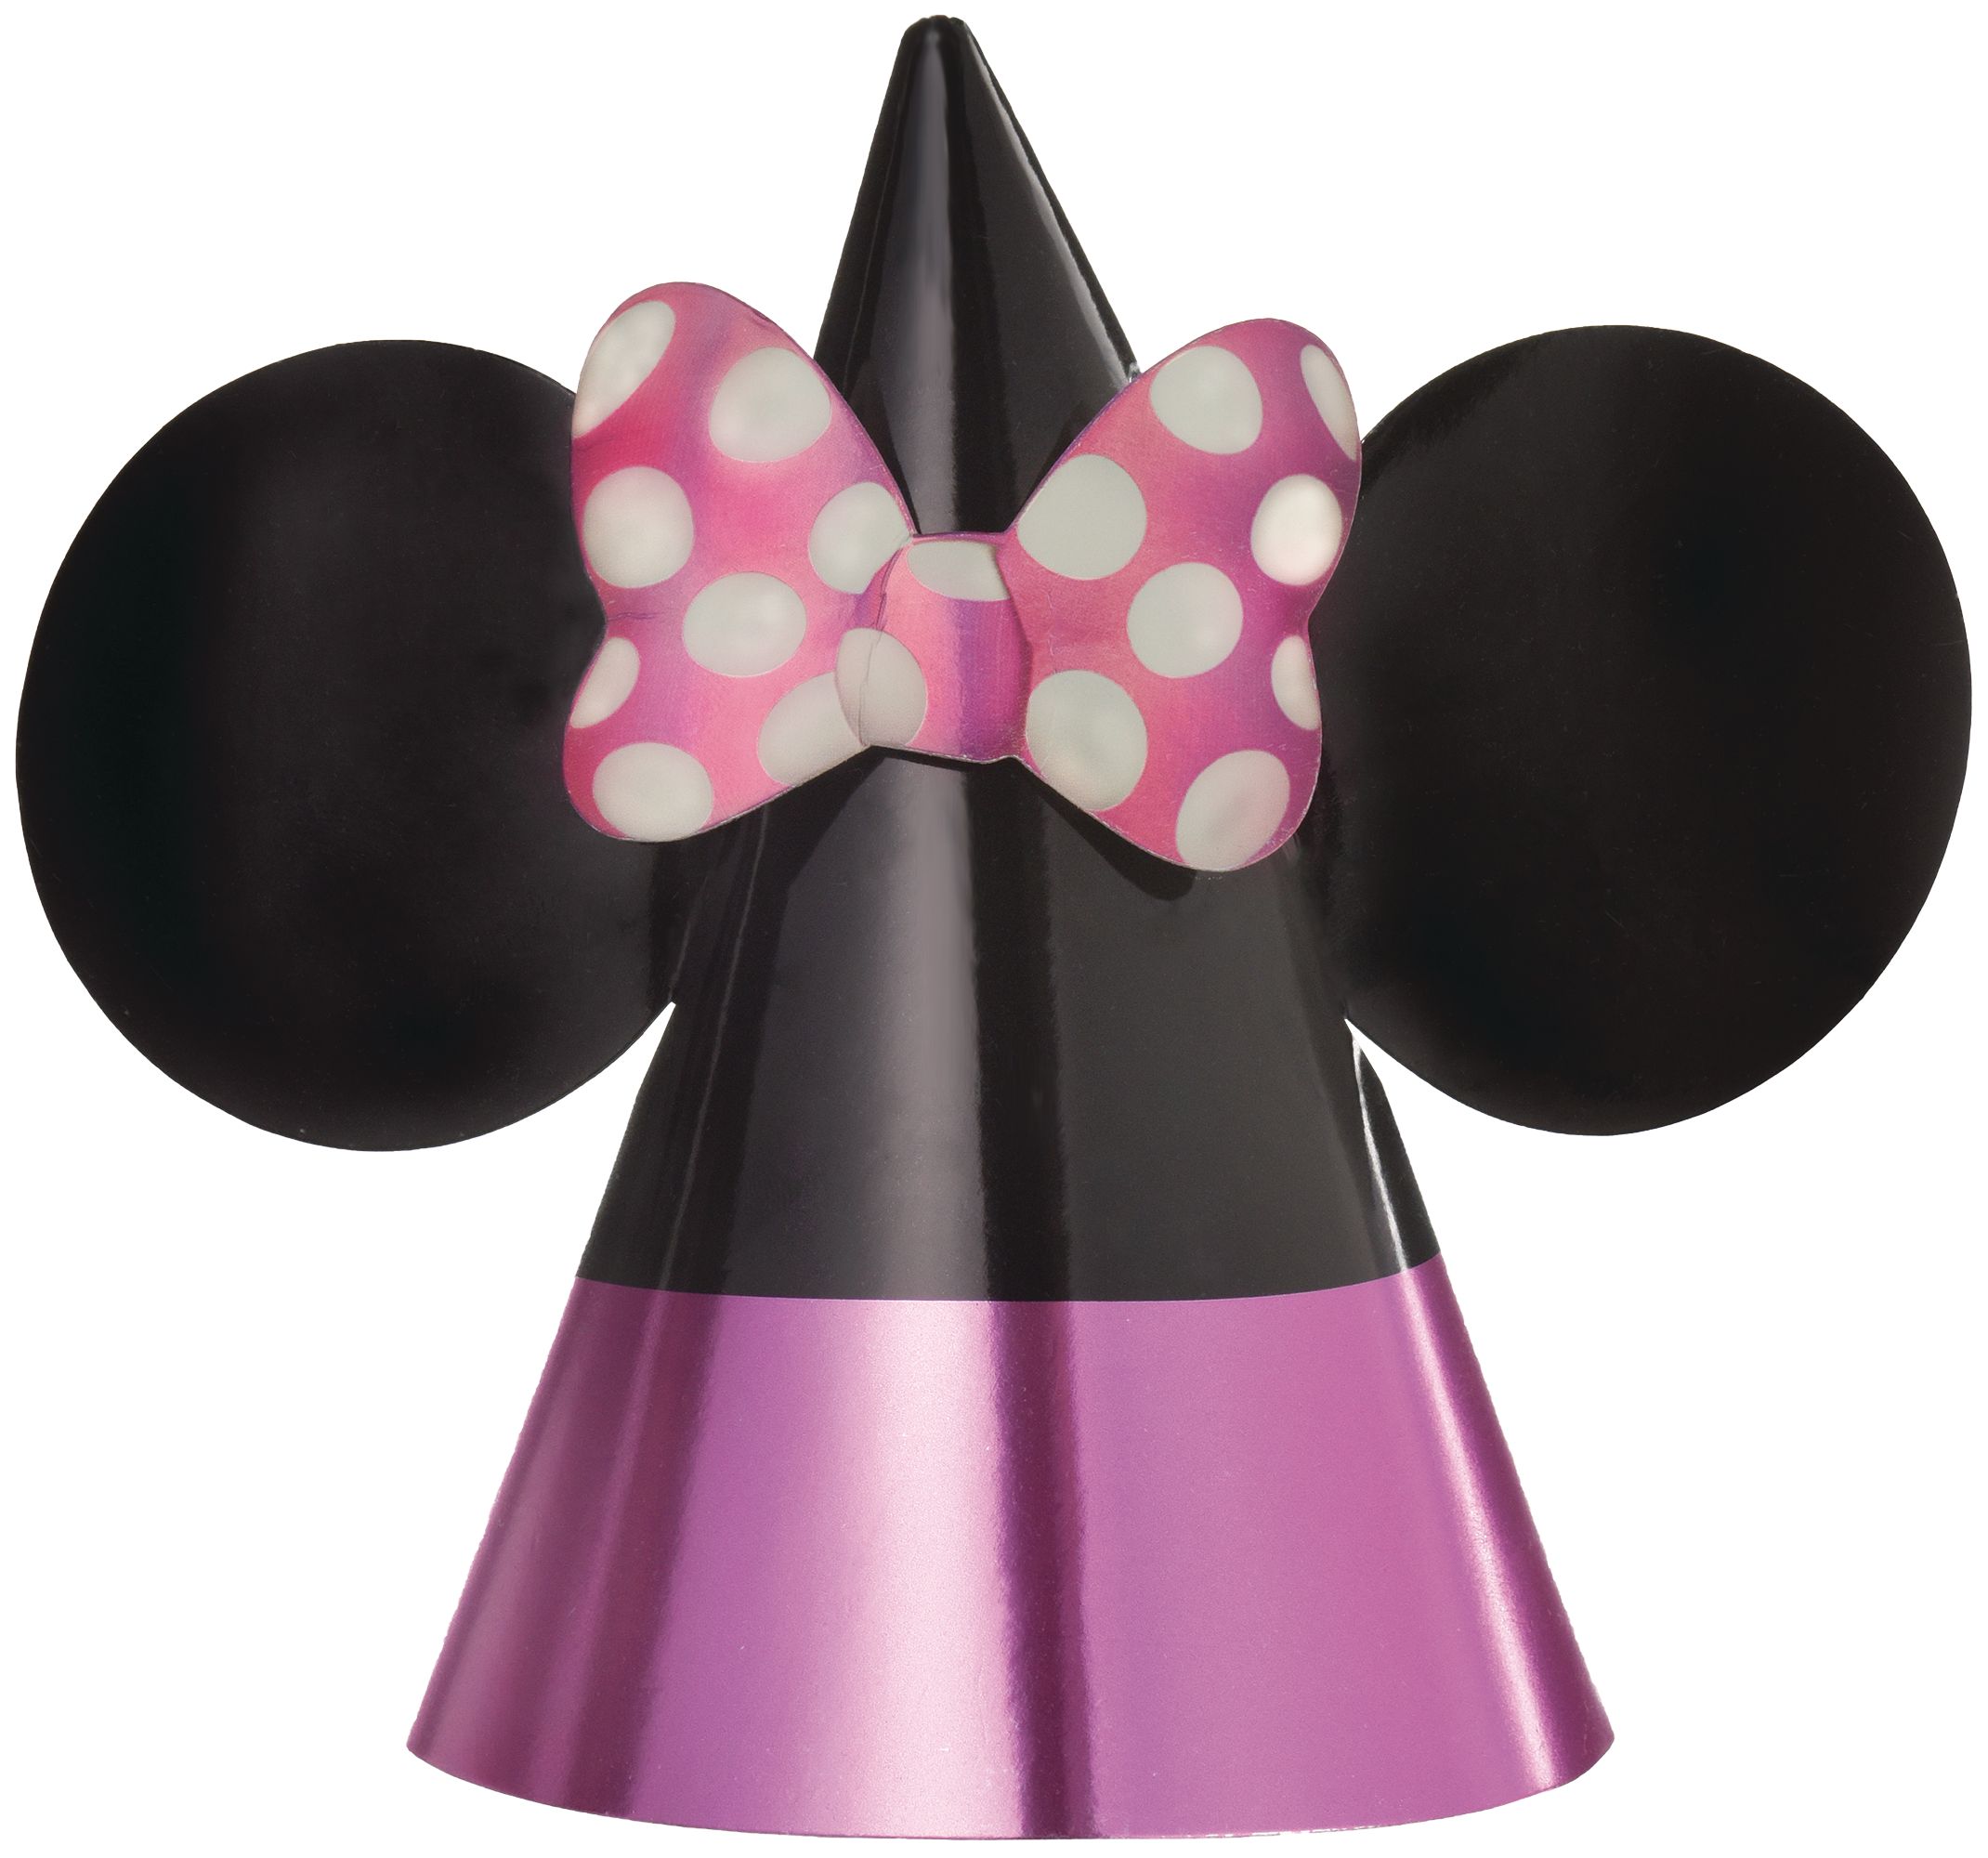 Girls Disney tank top orange with black trim Minnie Mouse polka dot bow